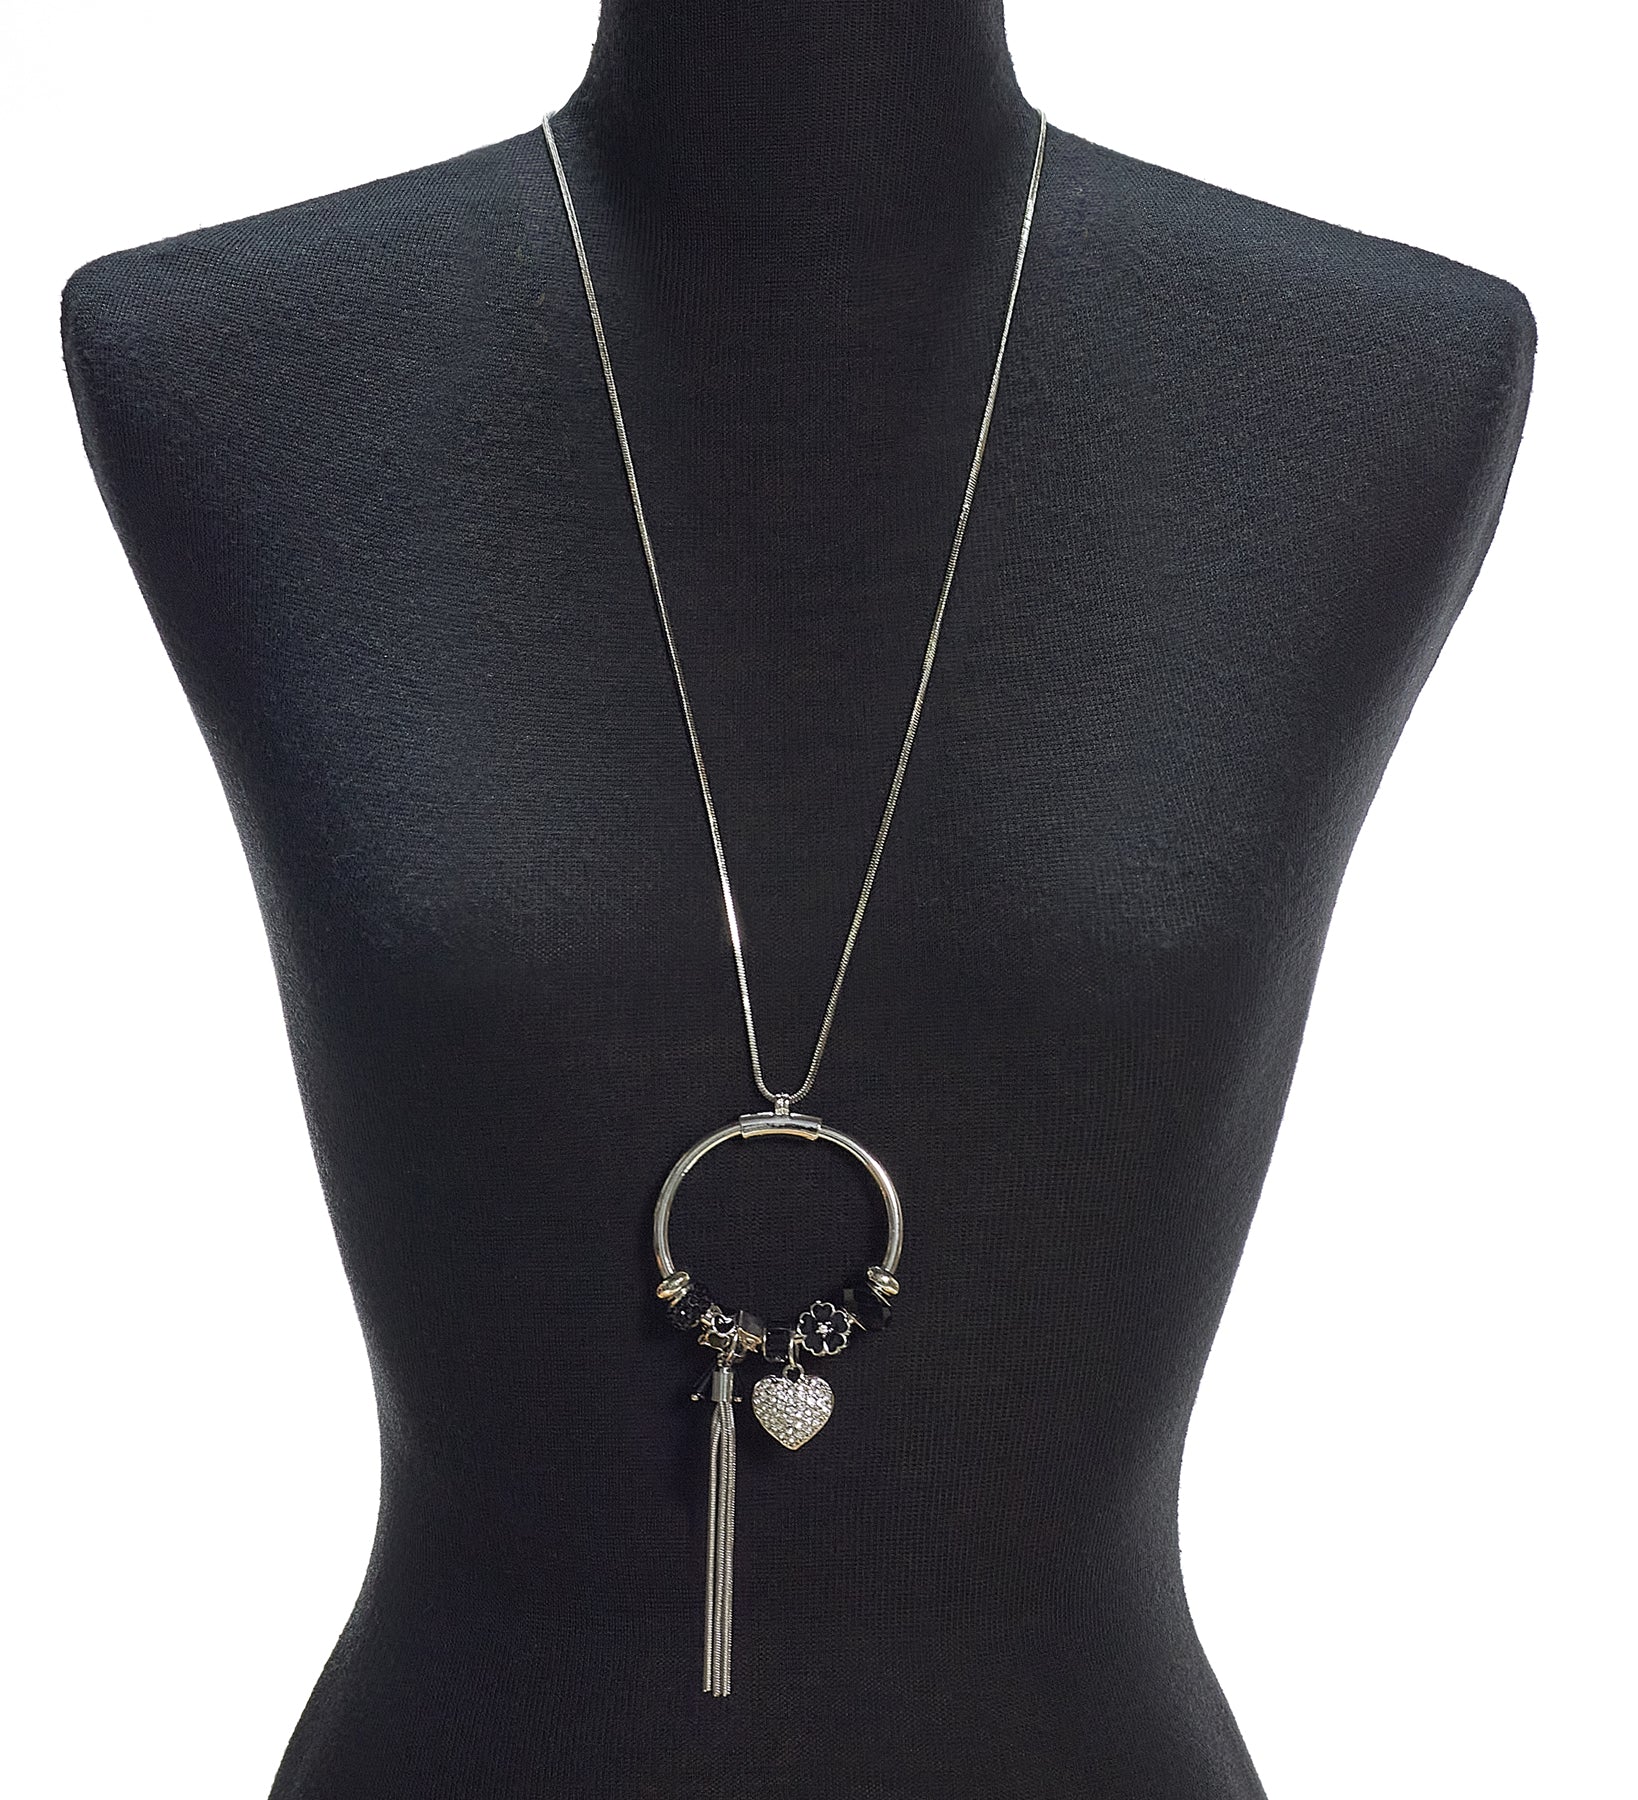 Les Nana Fringed Necklace-Buy Les Nana Jewelry Online Canada-Les Nana Montreal-Women's Jewelry Online Canada